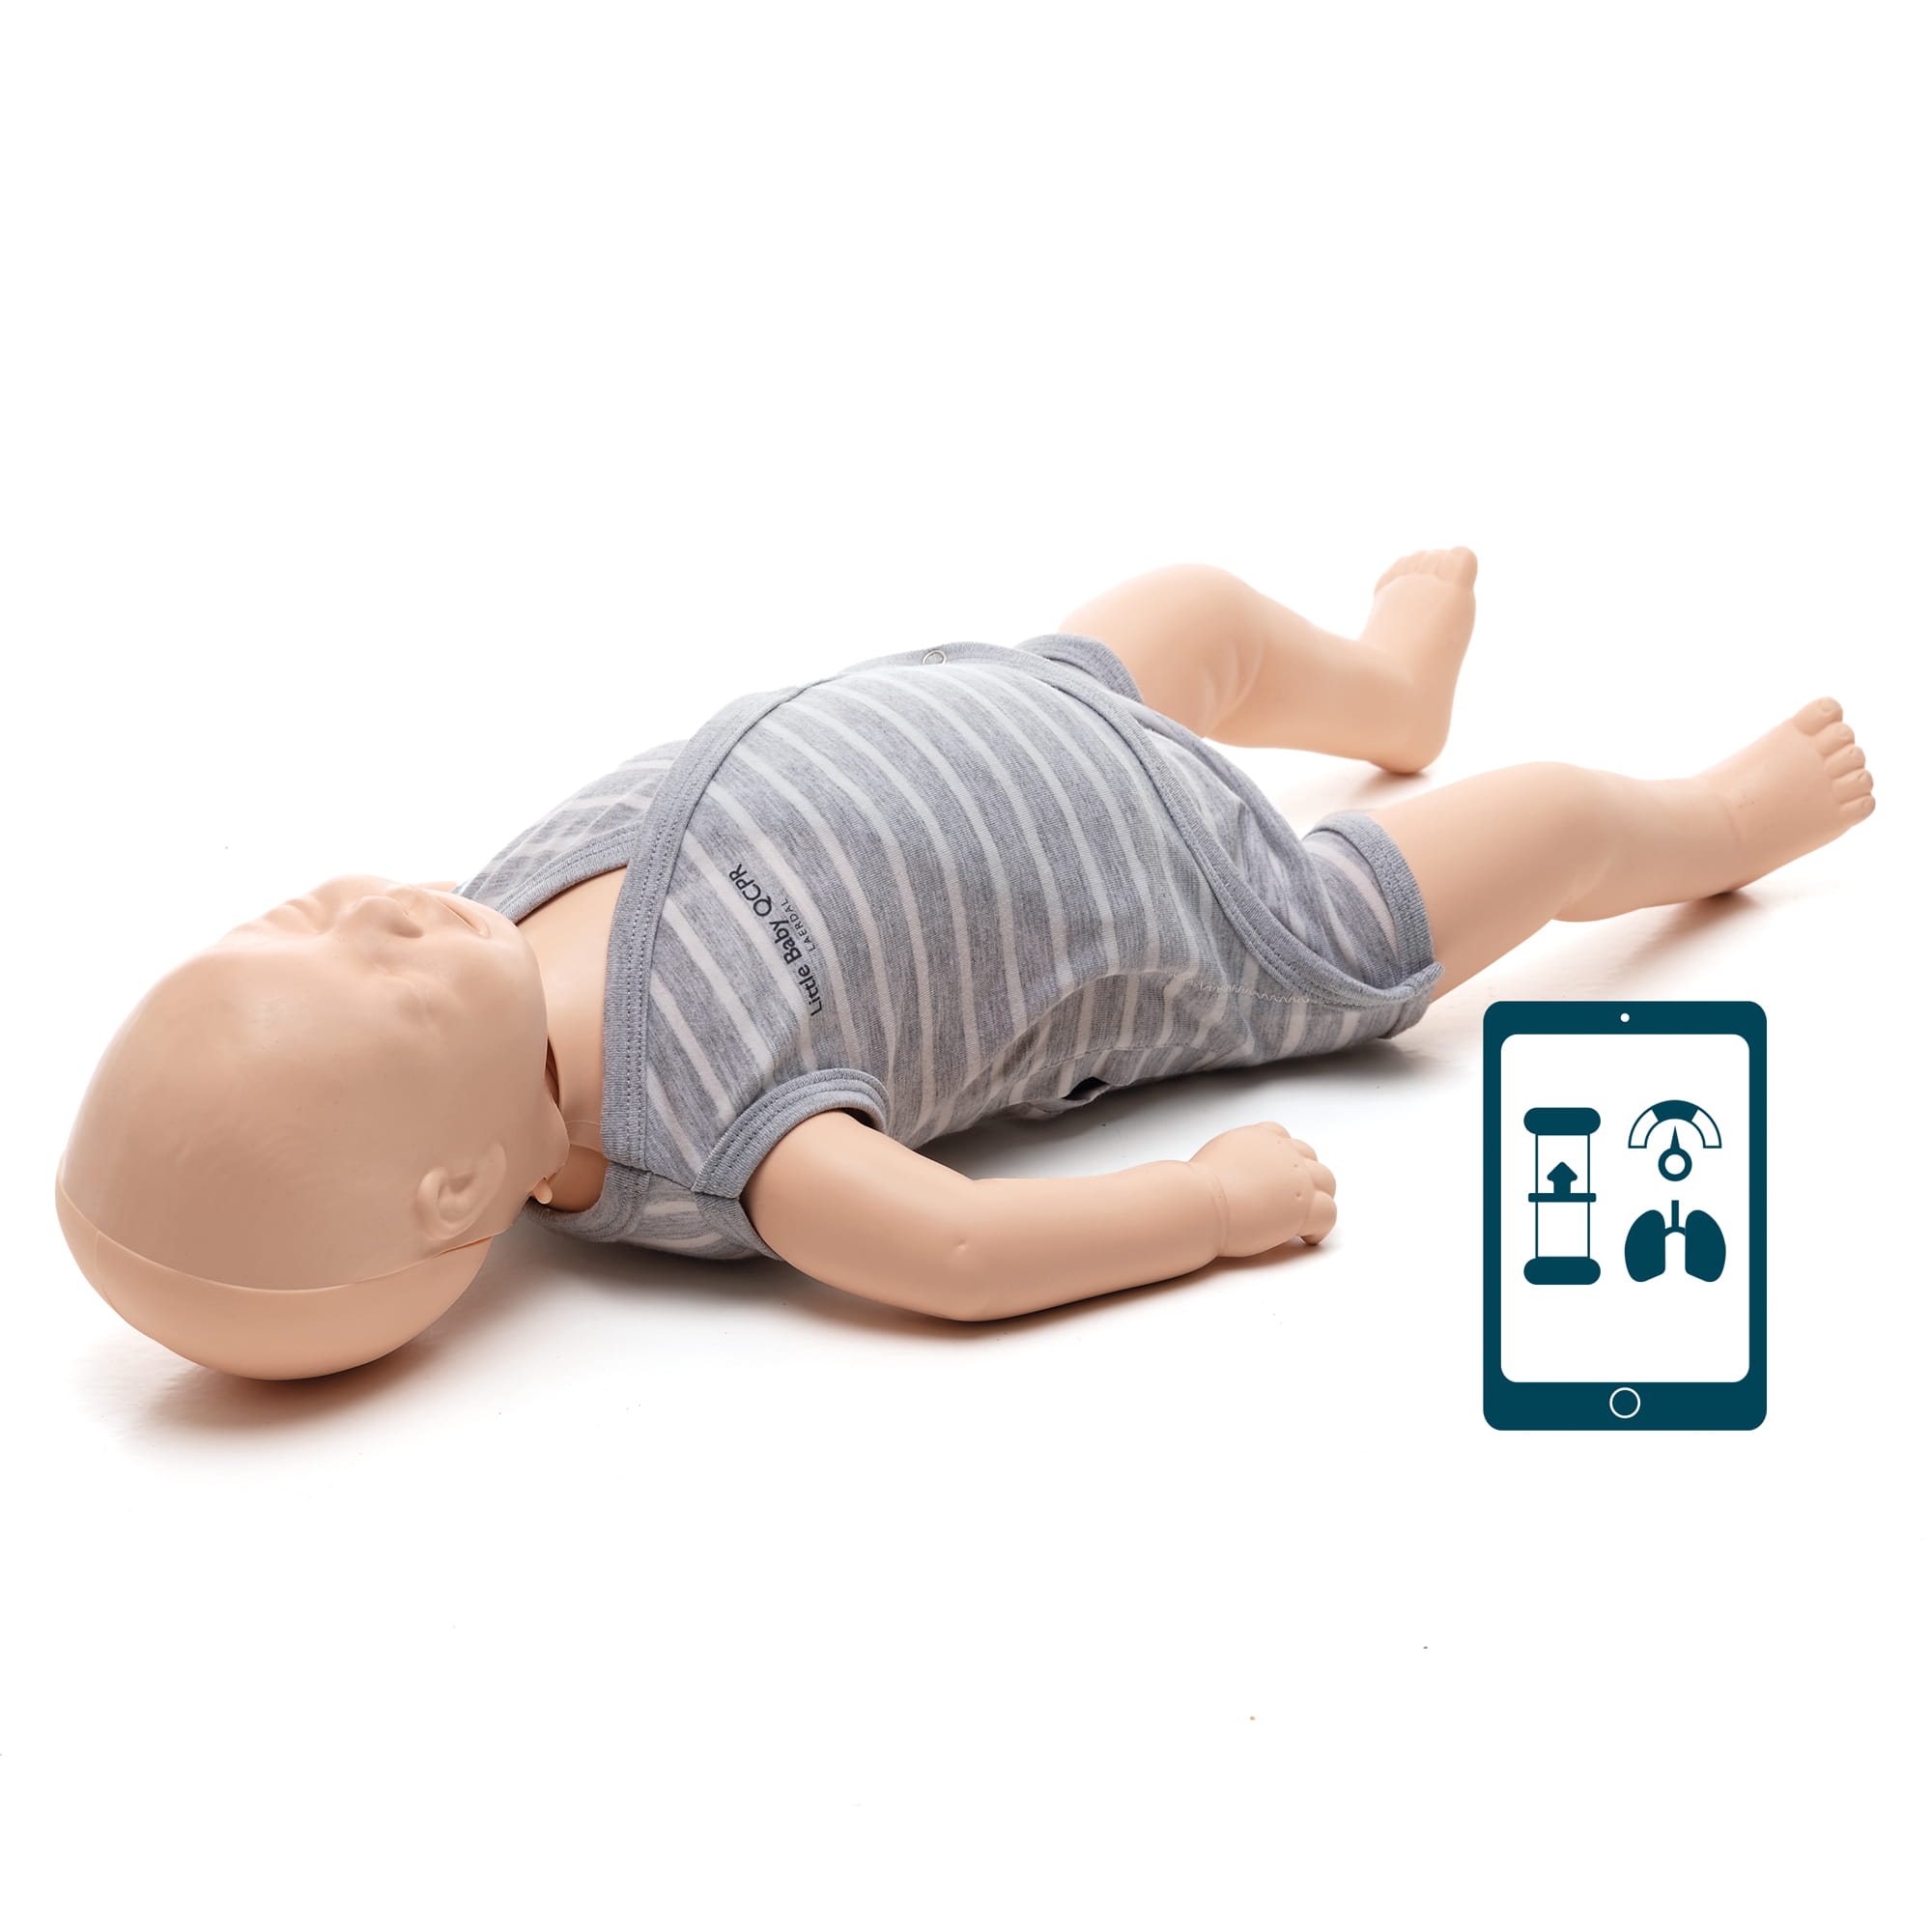 Laerdal Little Baby QCPR mit Feedback-Technologie